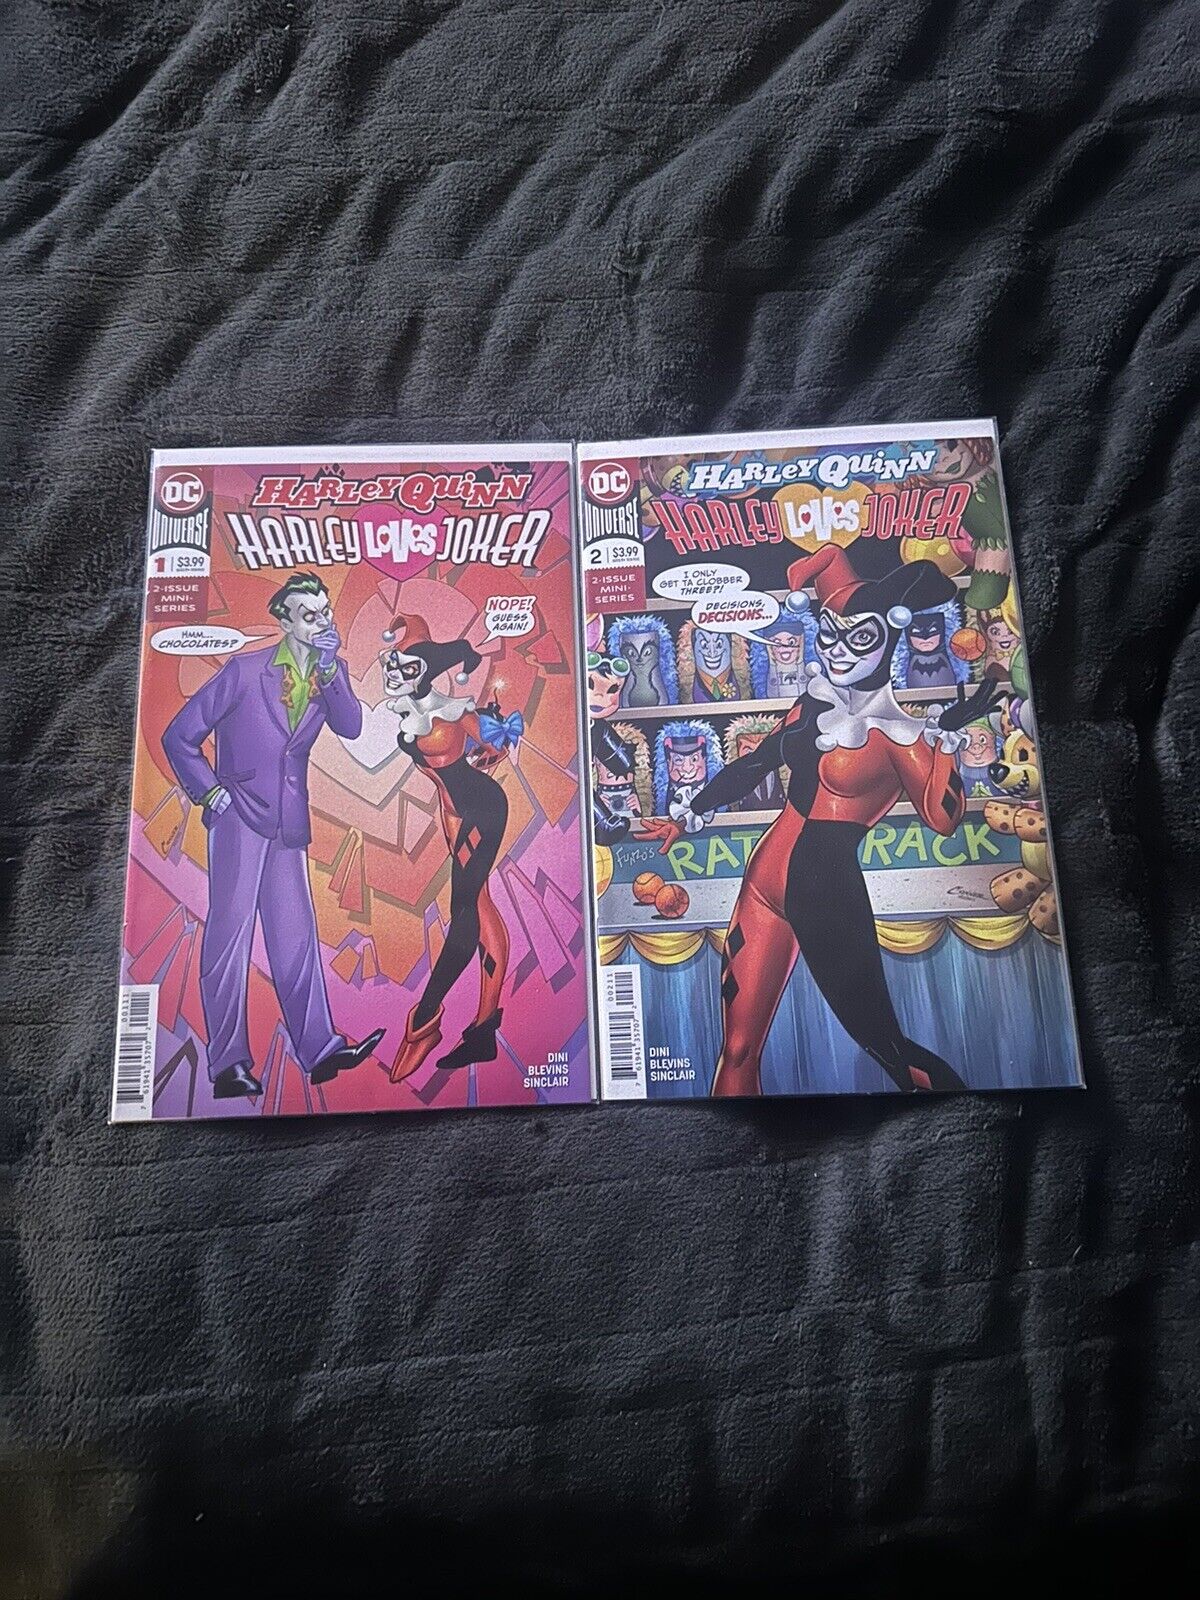 DC Comics Harley Quinn Mini Series Harley Loves Joker Issues 1-2 Very Nice